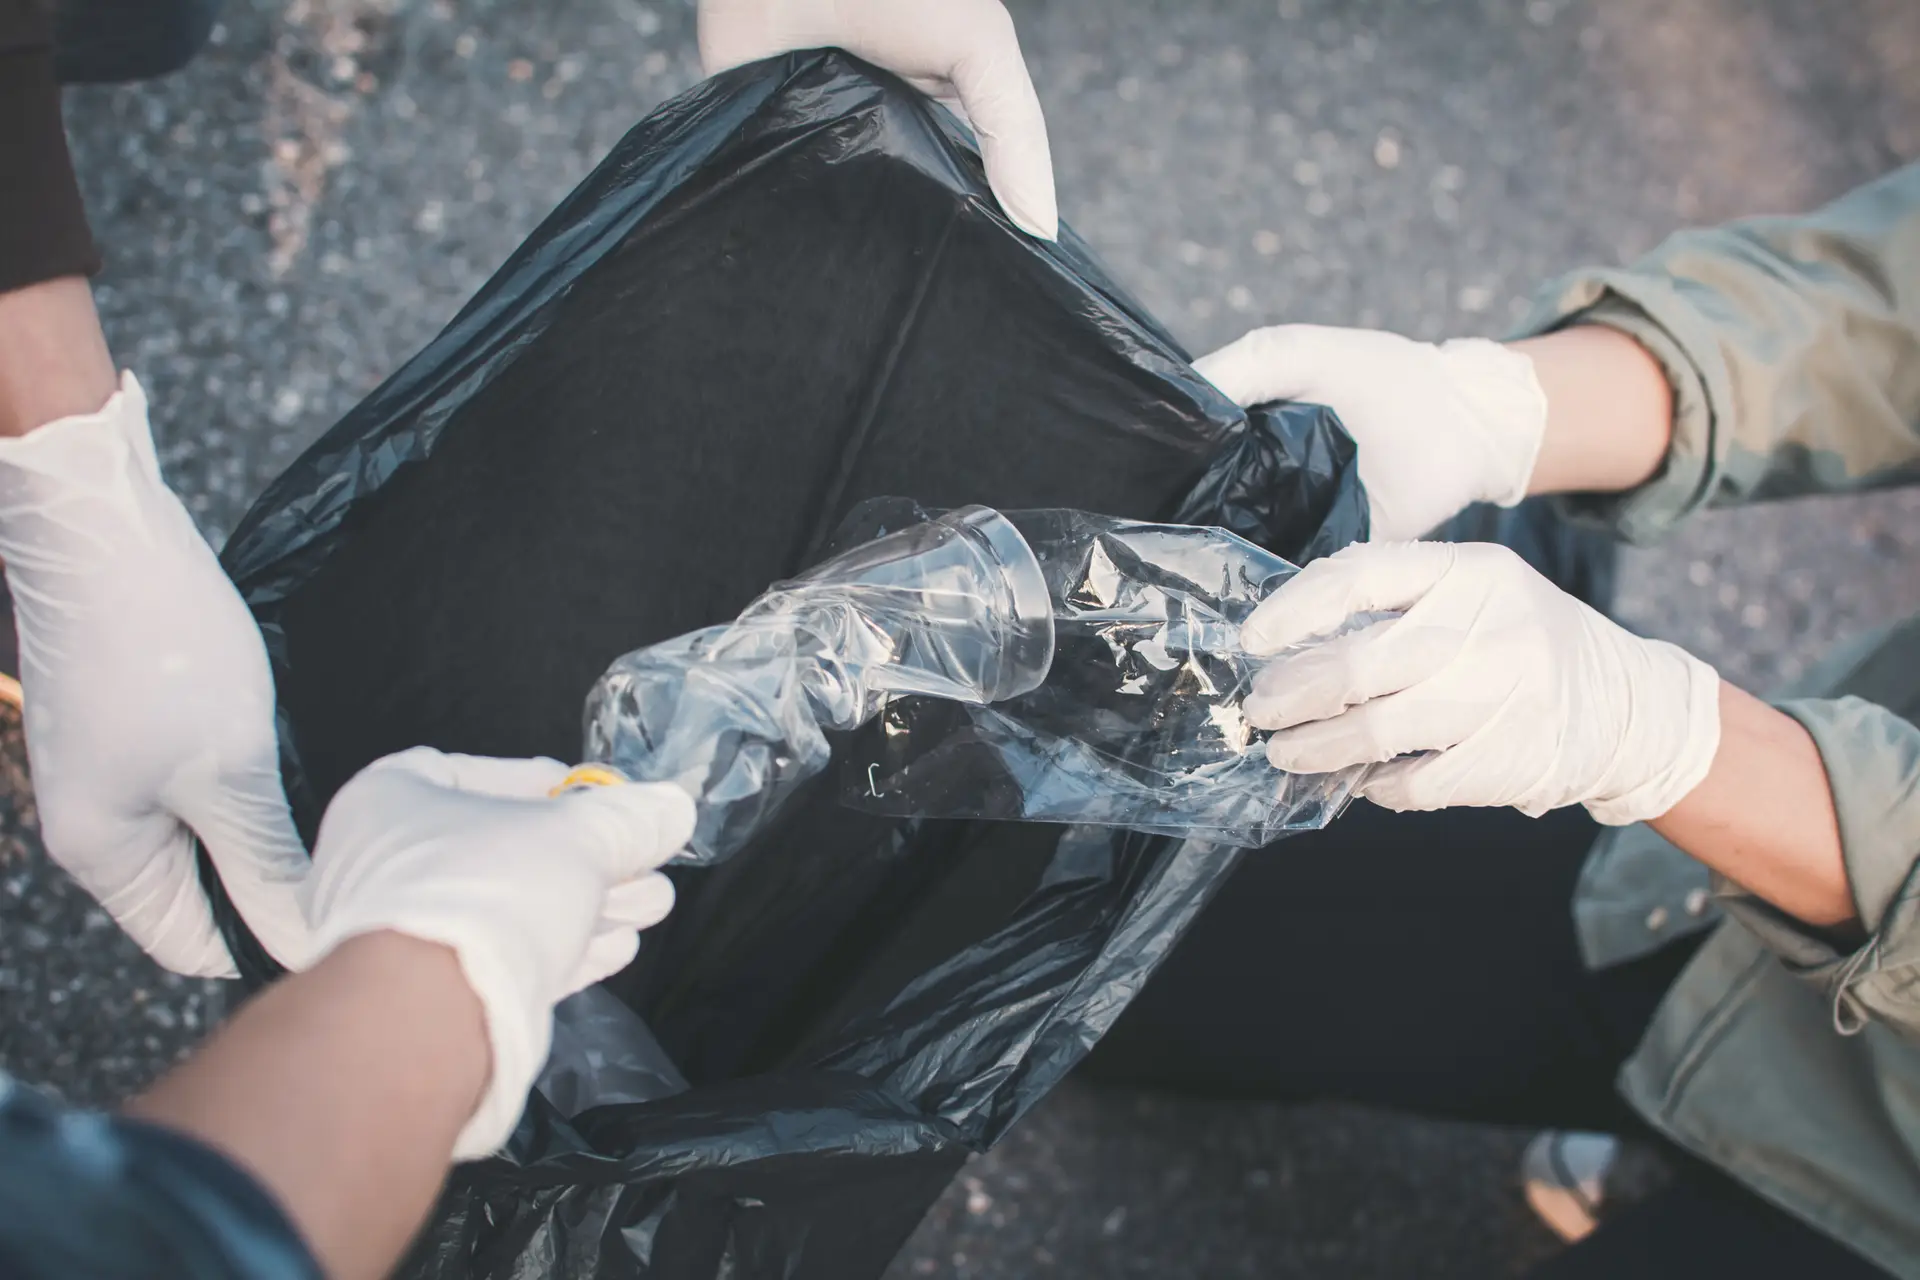 "Oeste + Recicla": trocar latas e embalagens de plástico por descontos nos transportes